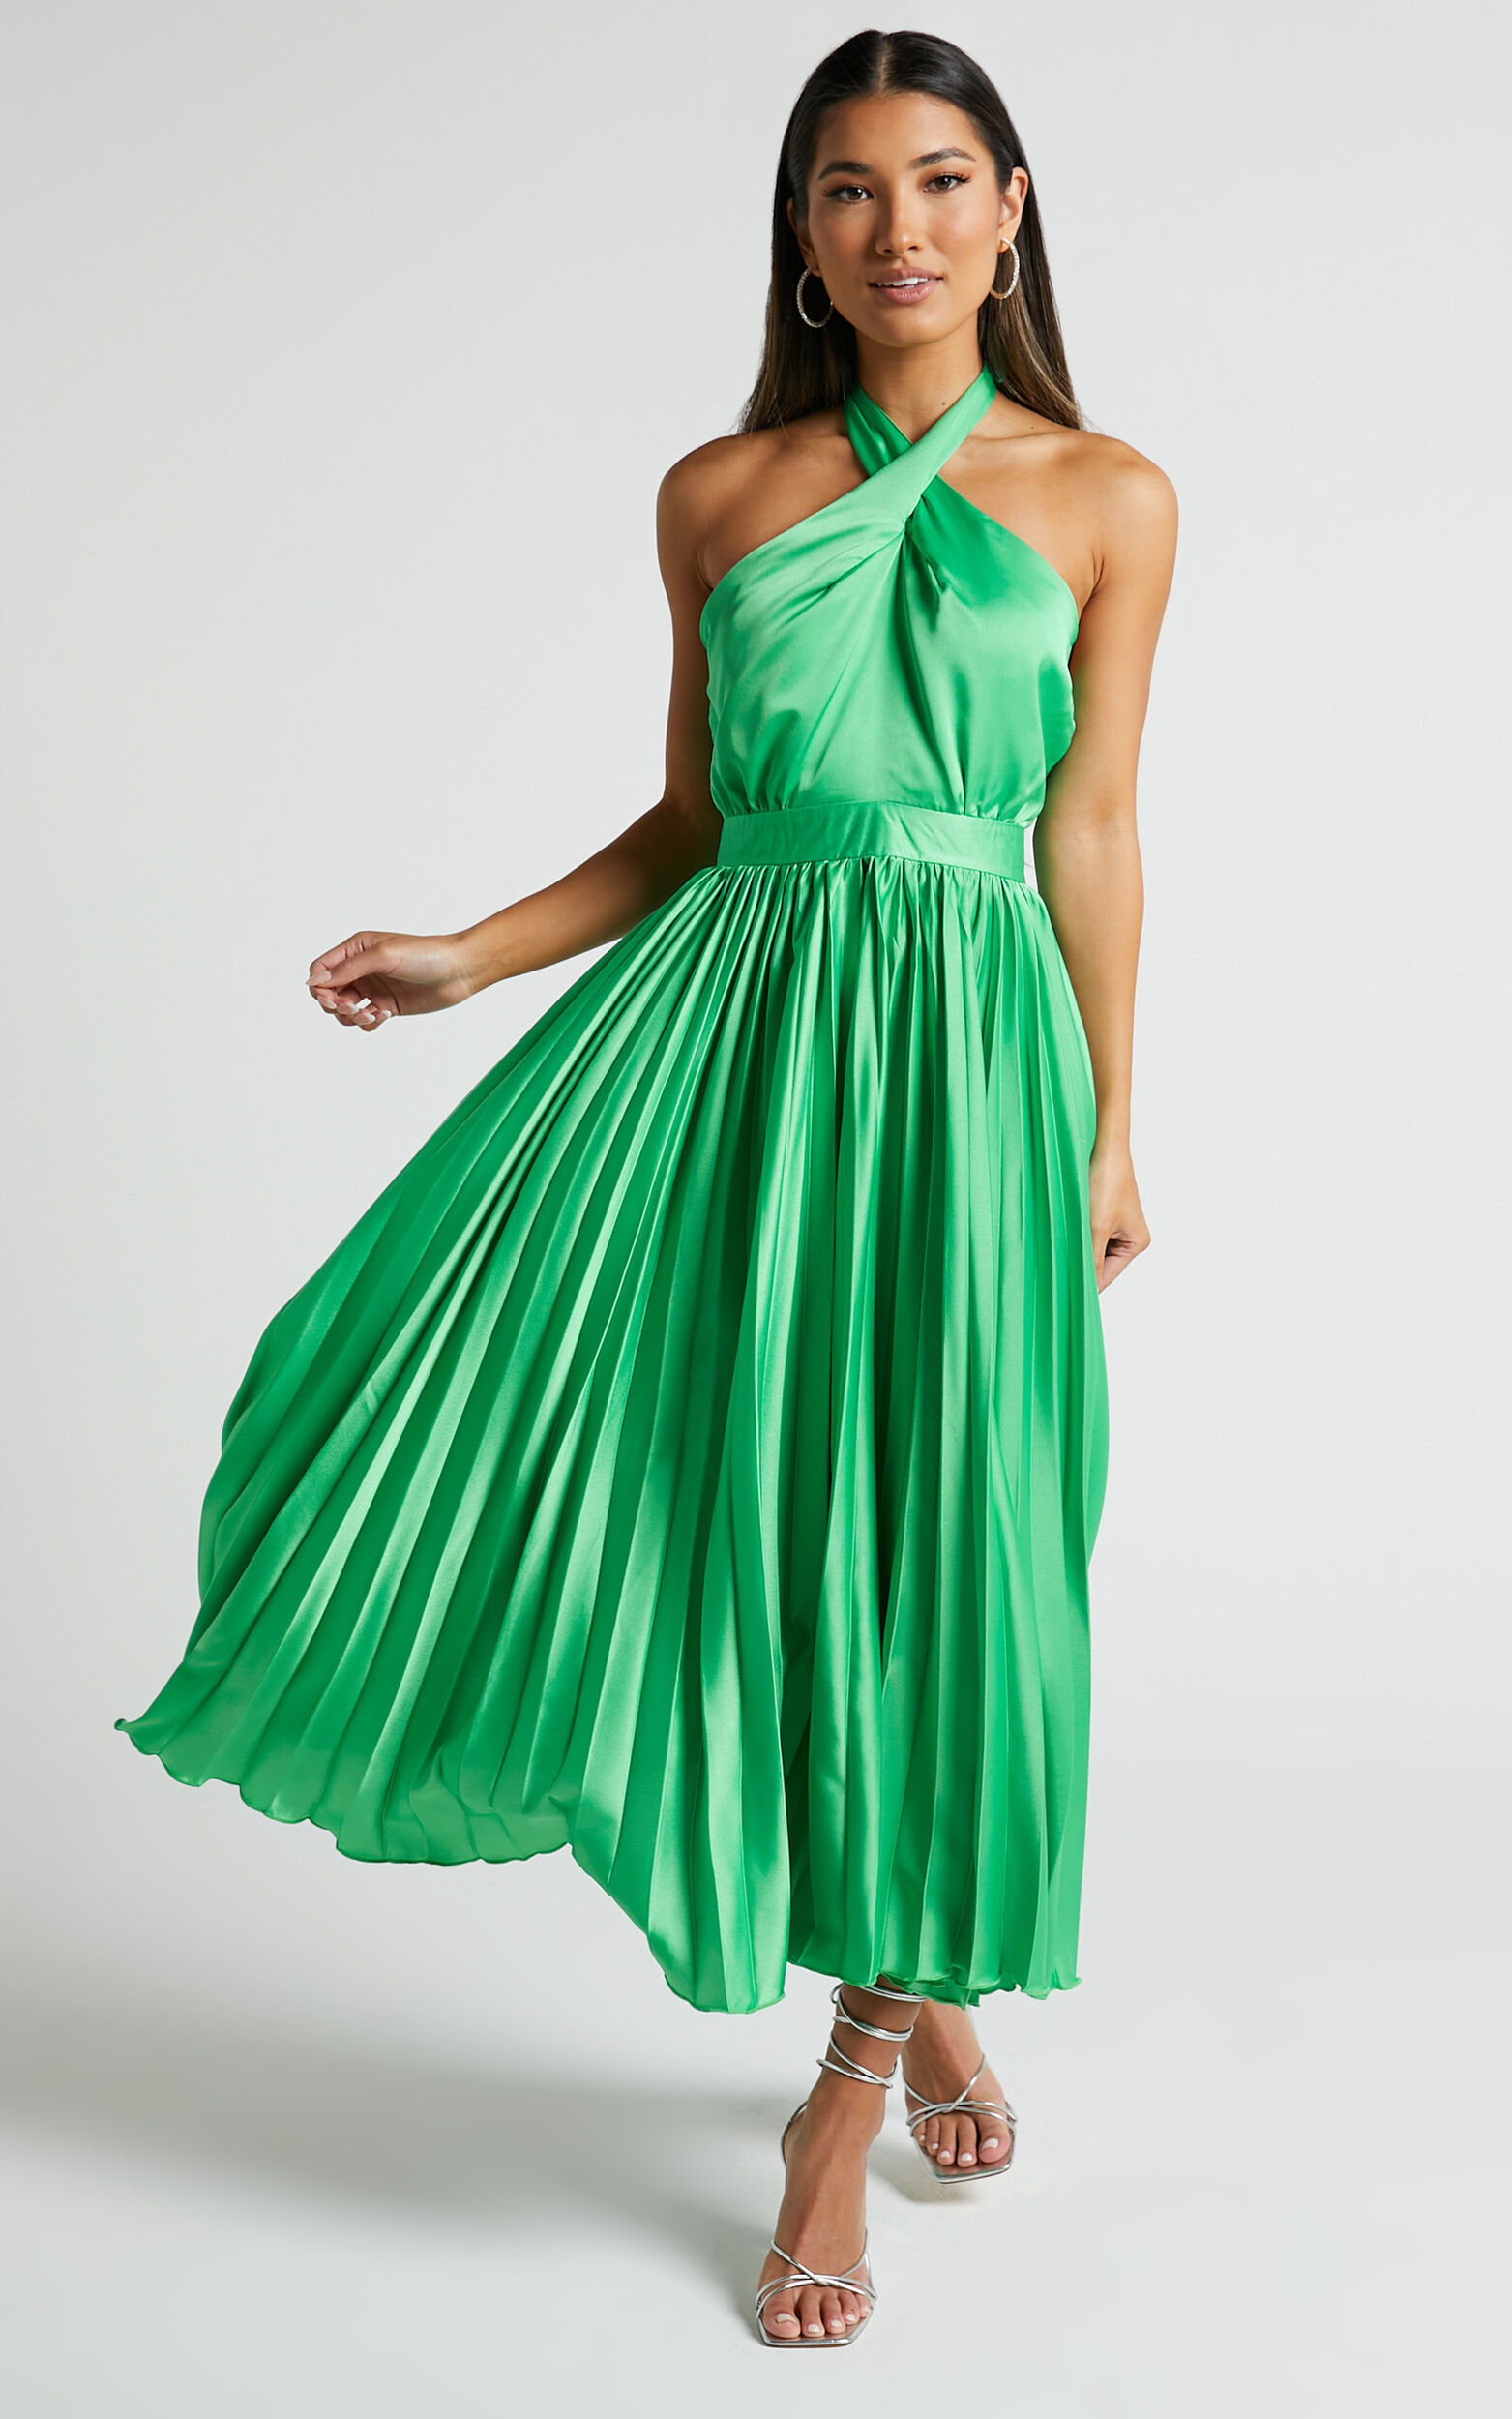 Eloise Midaxi Dress - Halter Neck Pleated Dress in Jewel Green - 06, GRN1